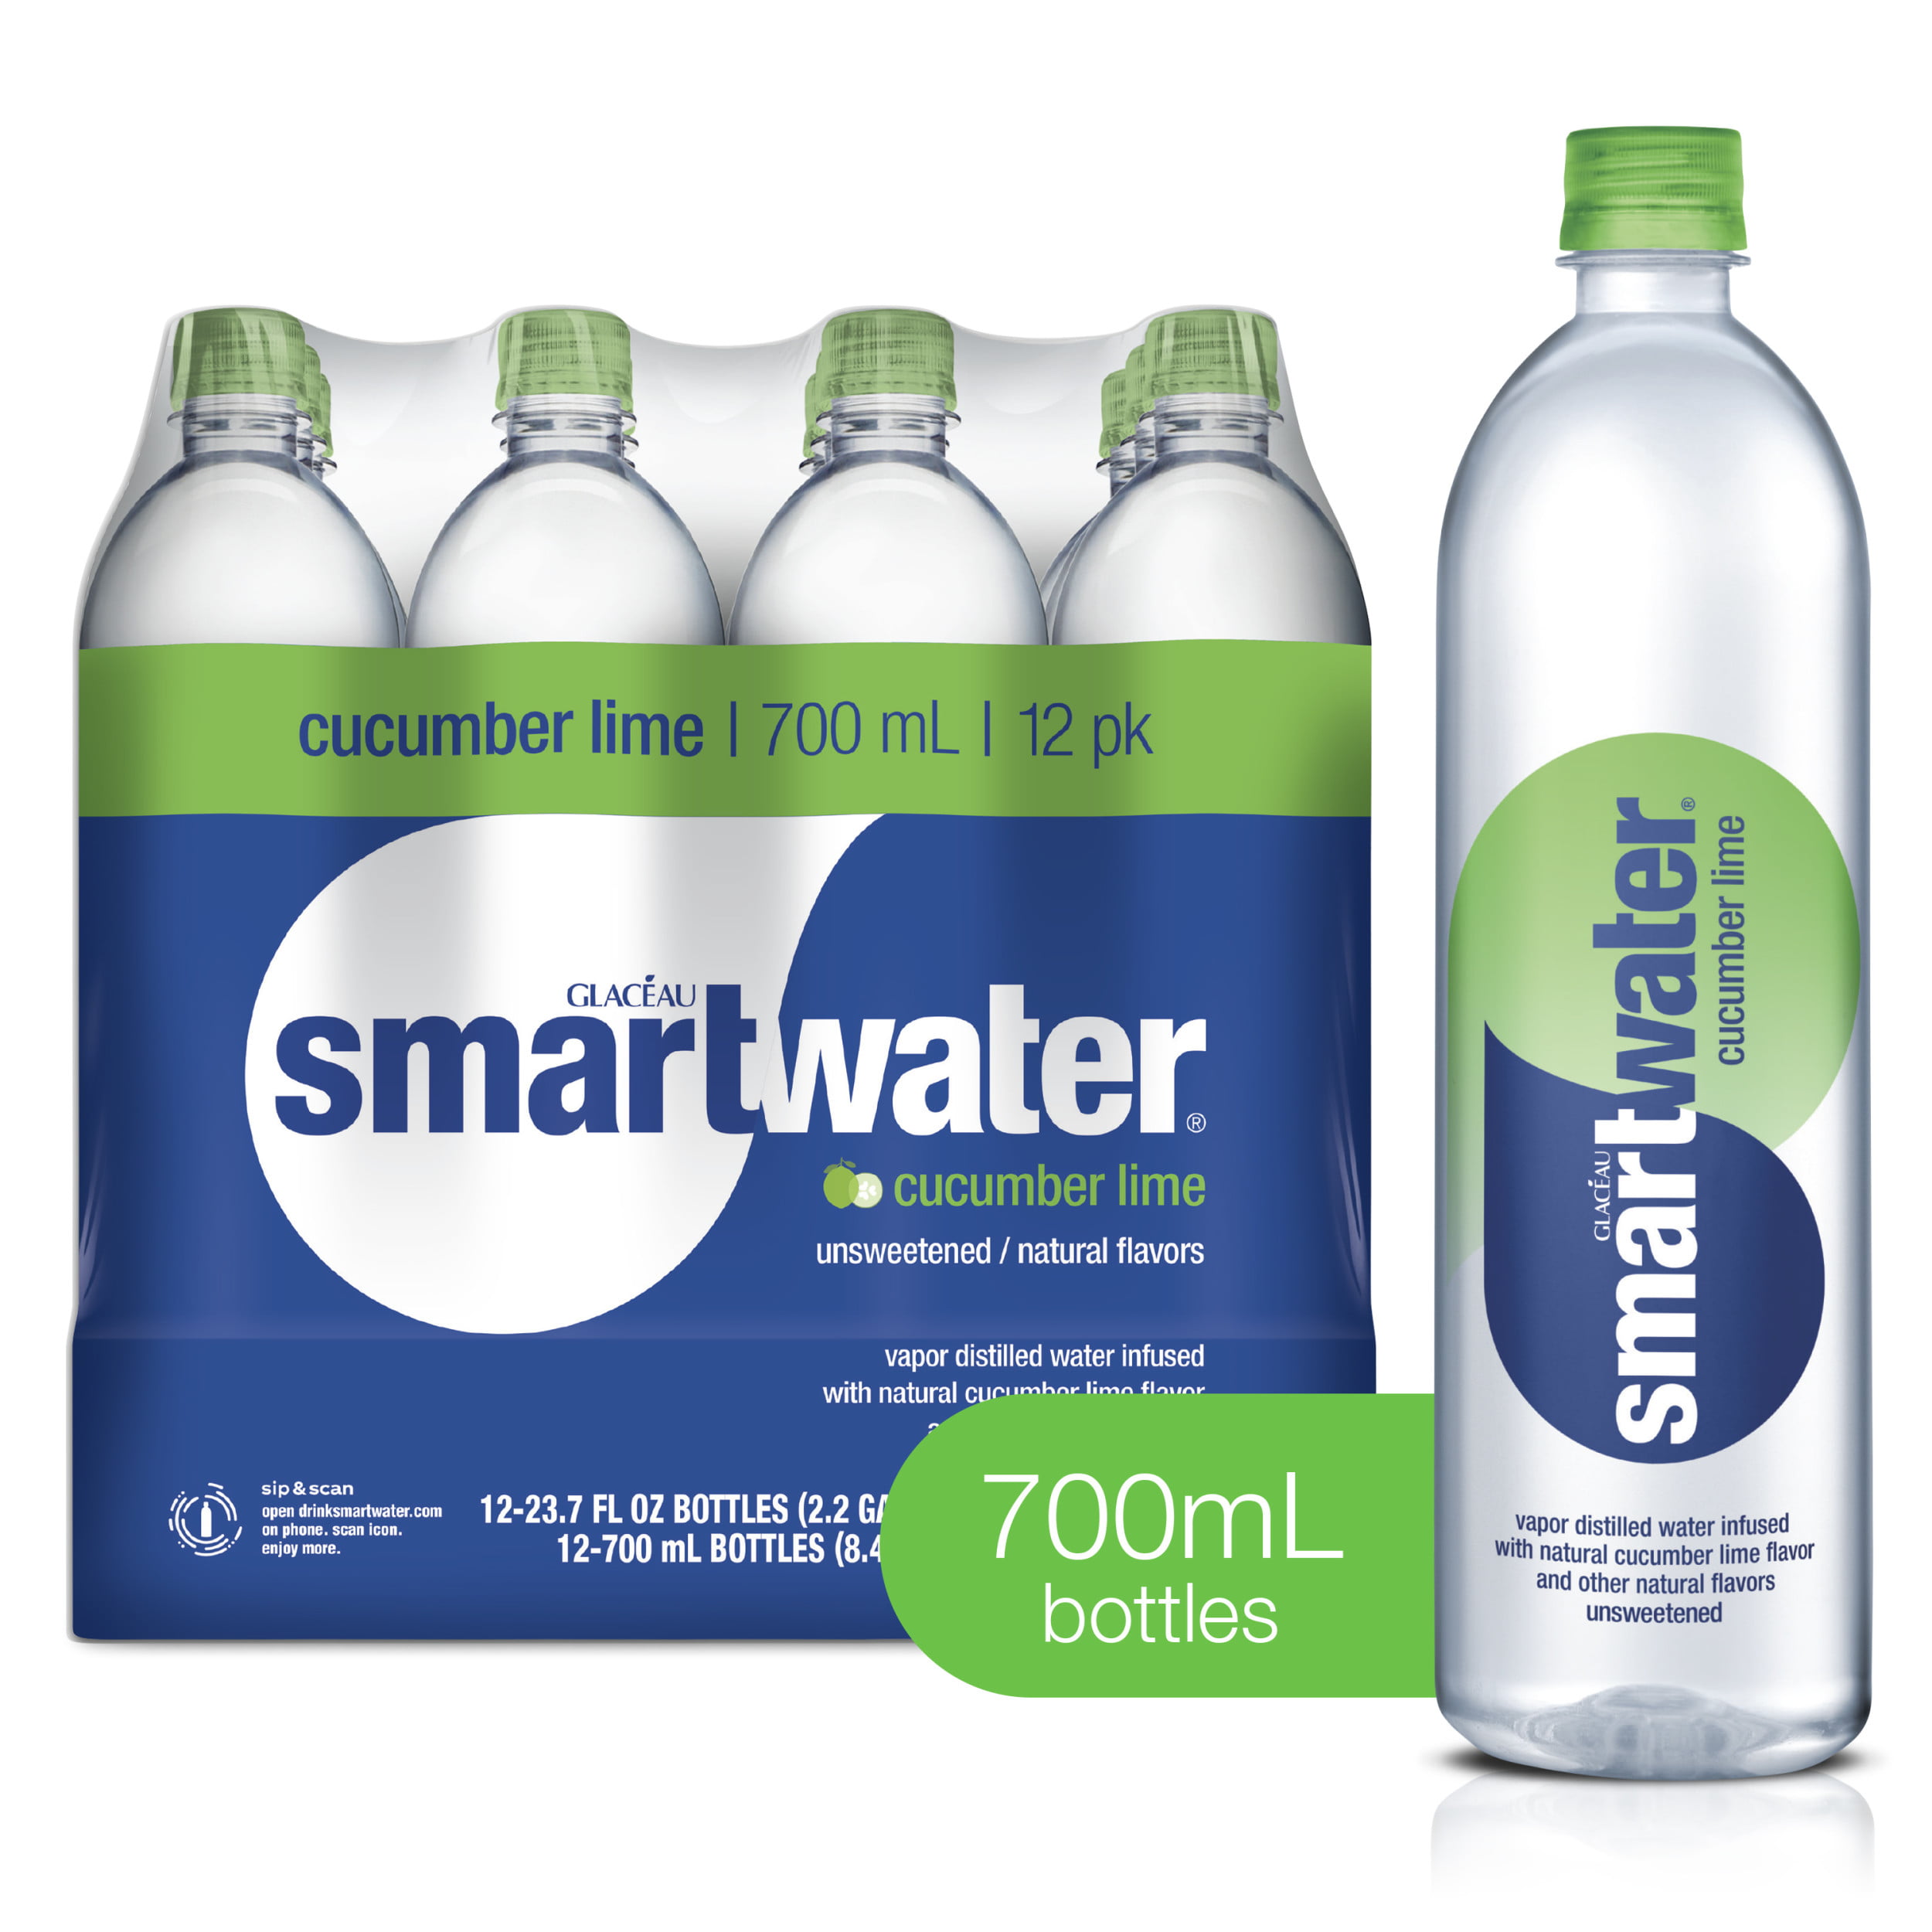 12 Bottles) smartwater cucumber lime, vapor distilled premium bottled water,  23.7 fl oz - Walmart.com - Walmart.com